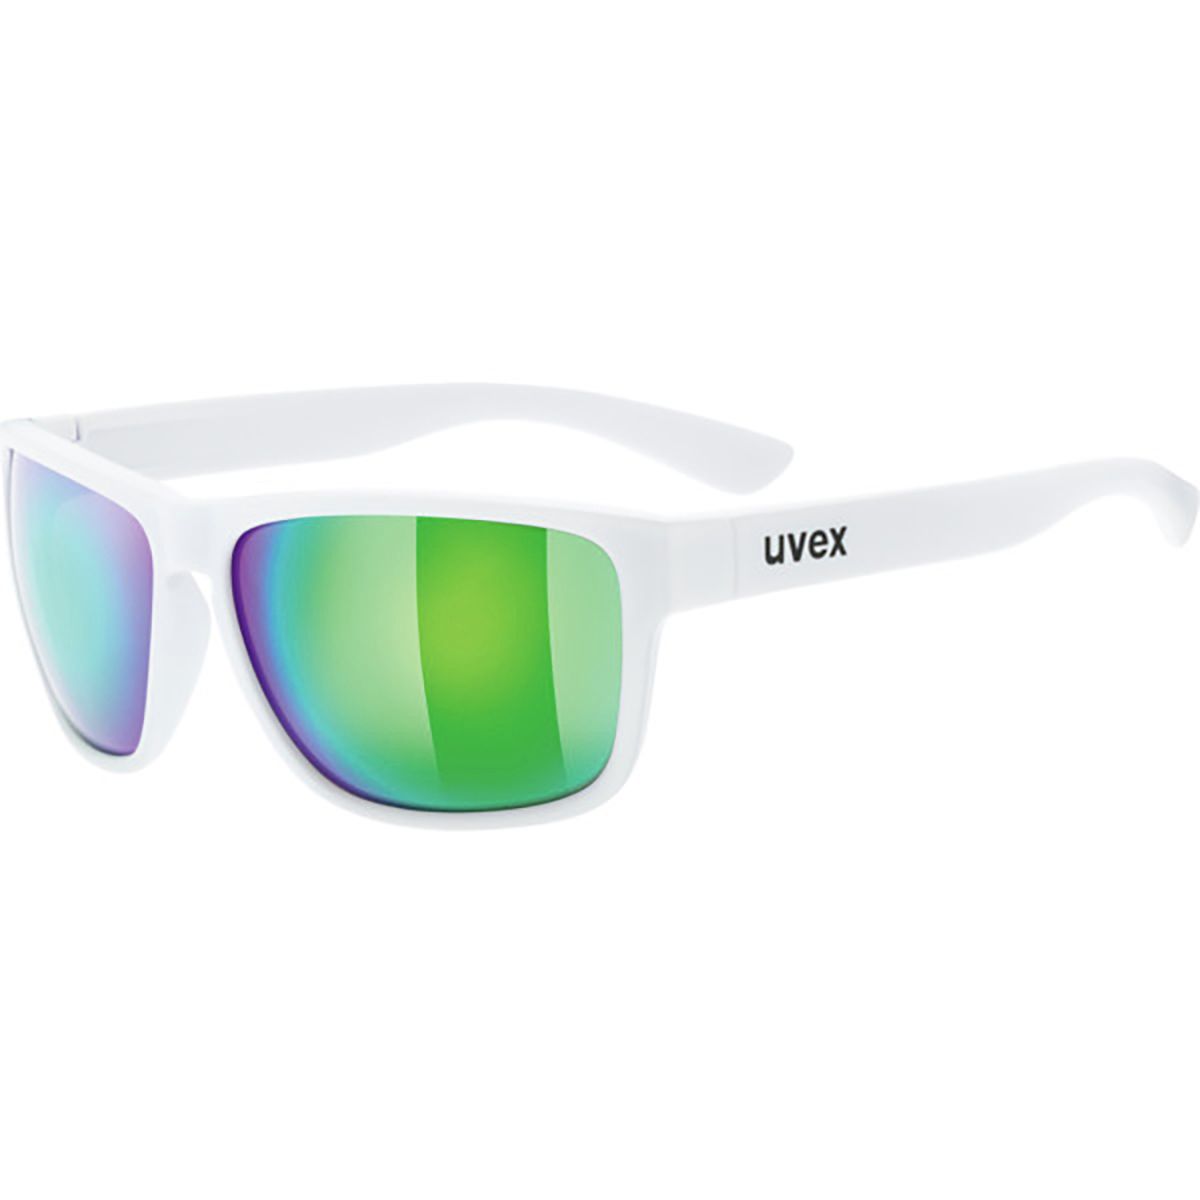 Uvex LGL 36 Colorvision Sunglasses - Men's